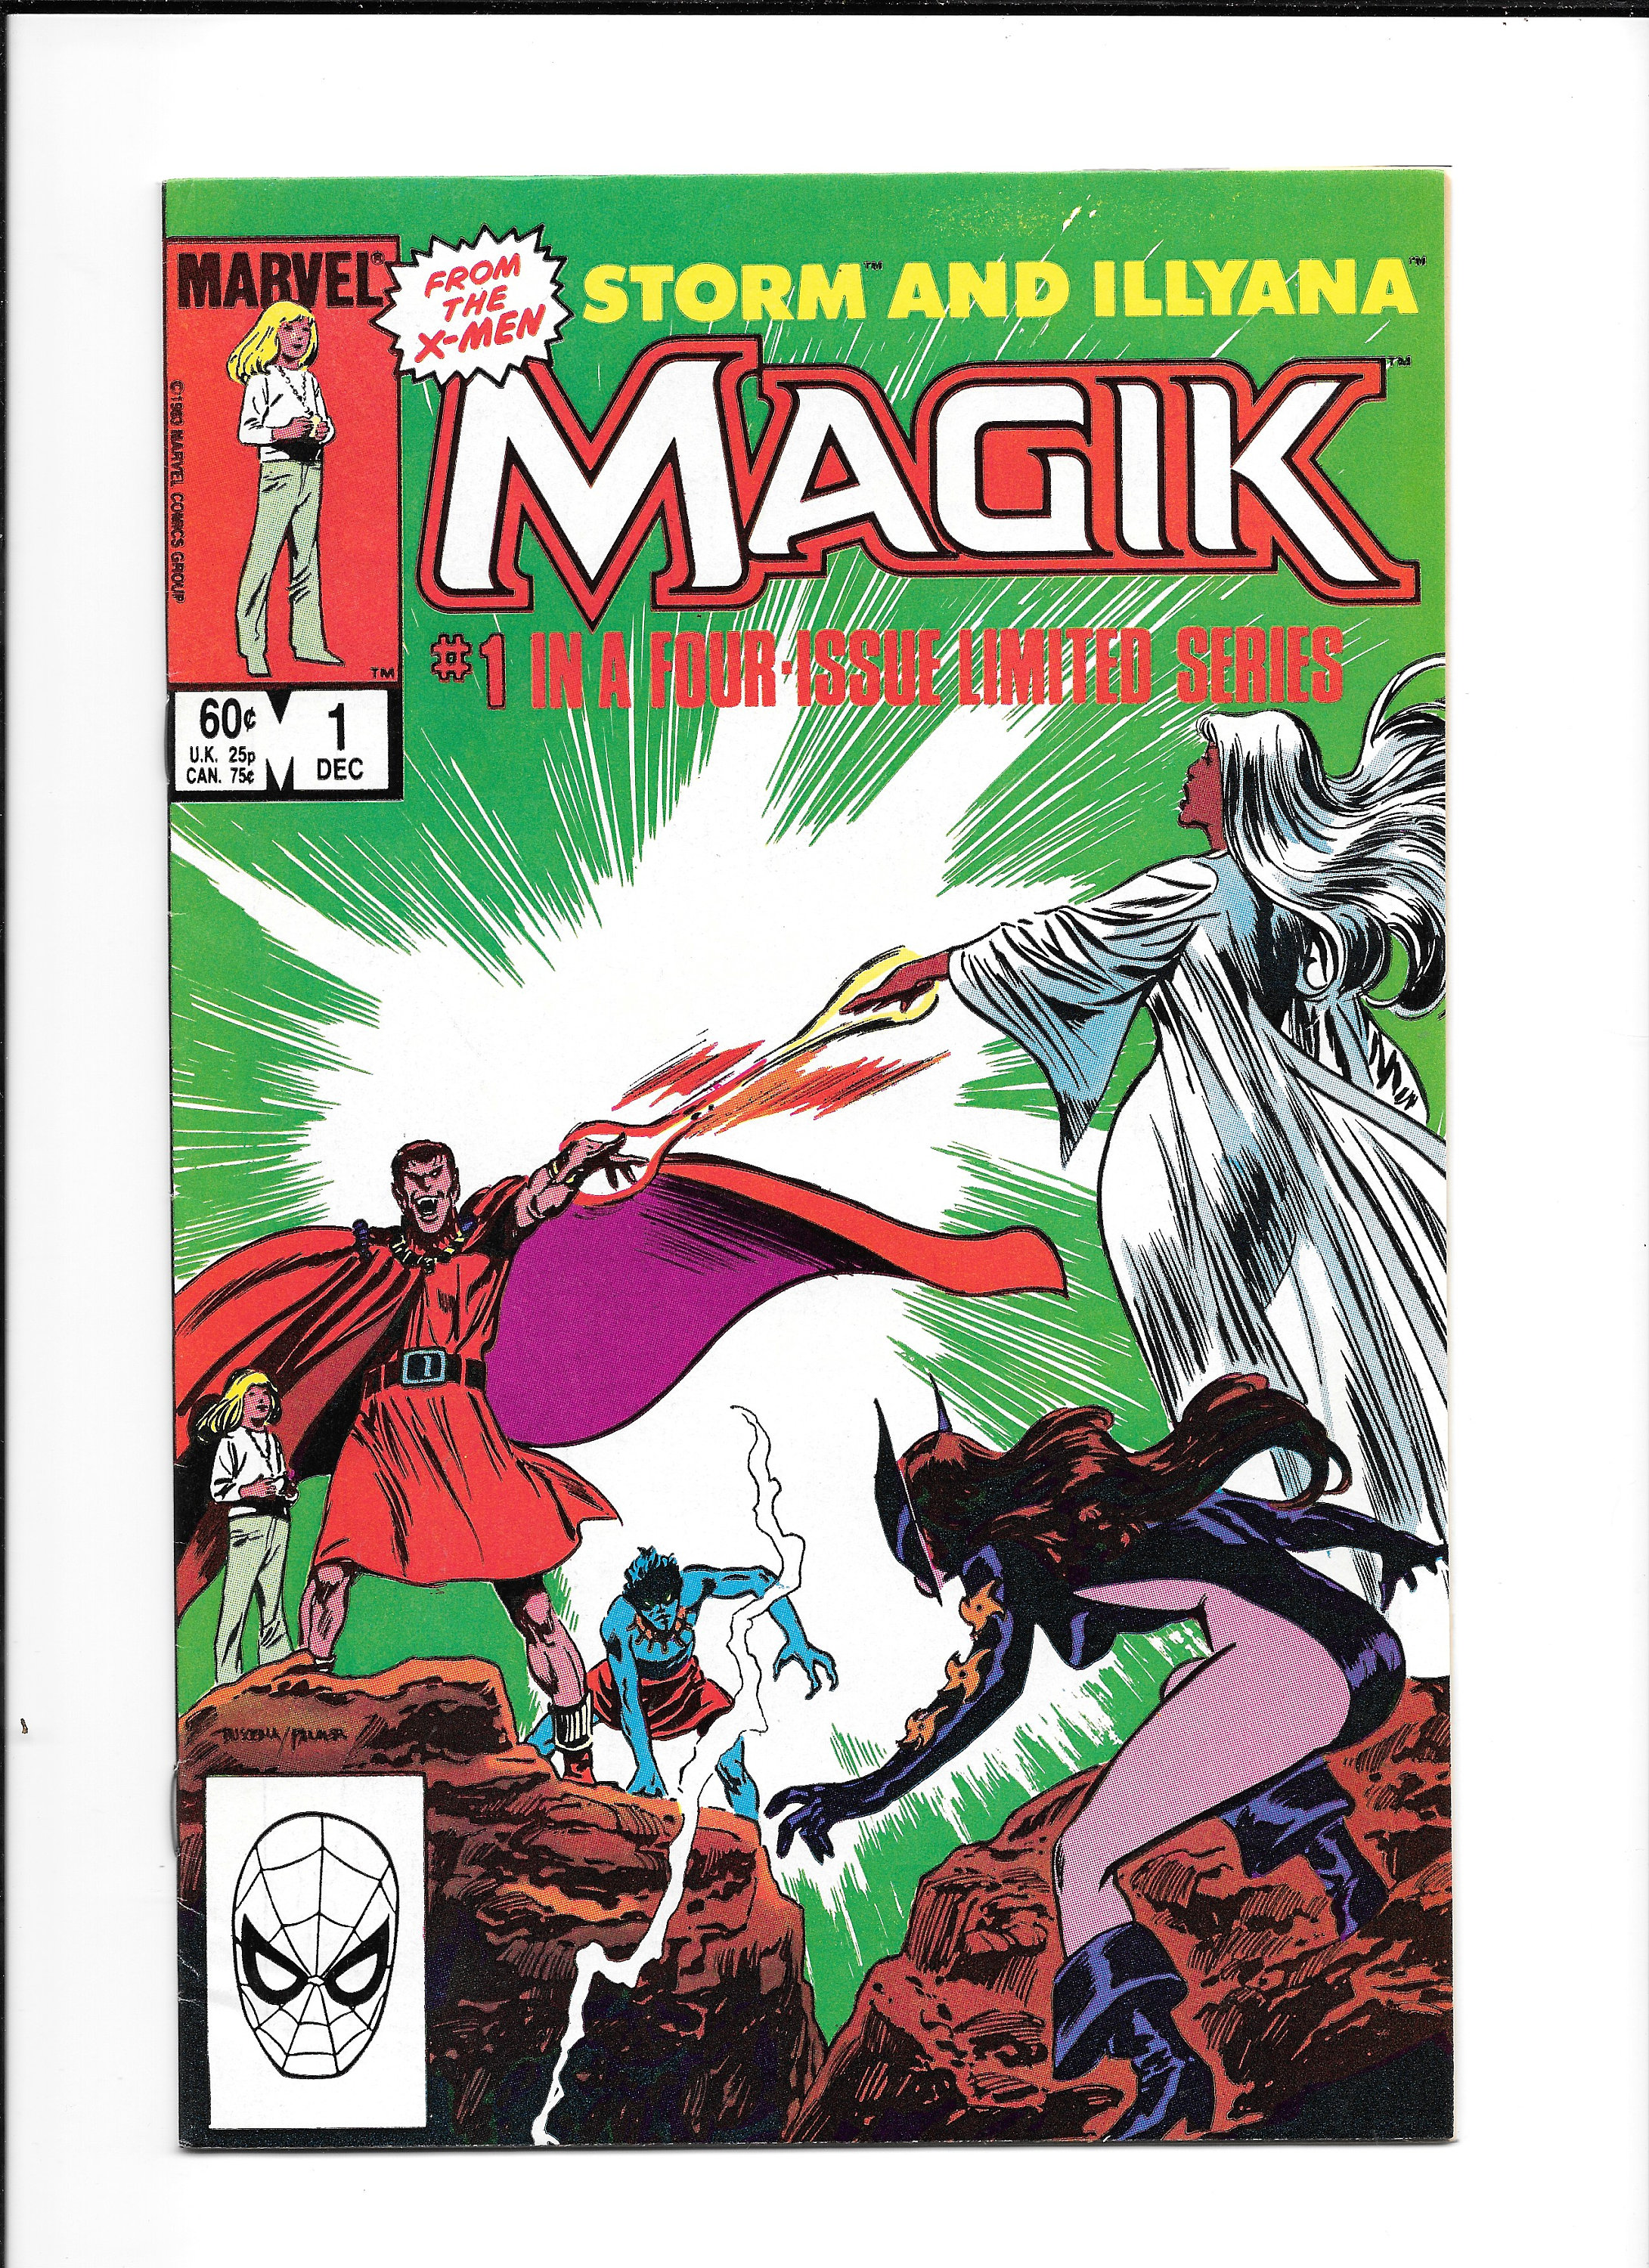 Magik (X-men: New Mutants) scenes 